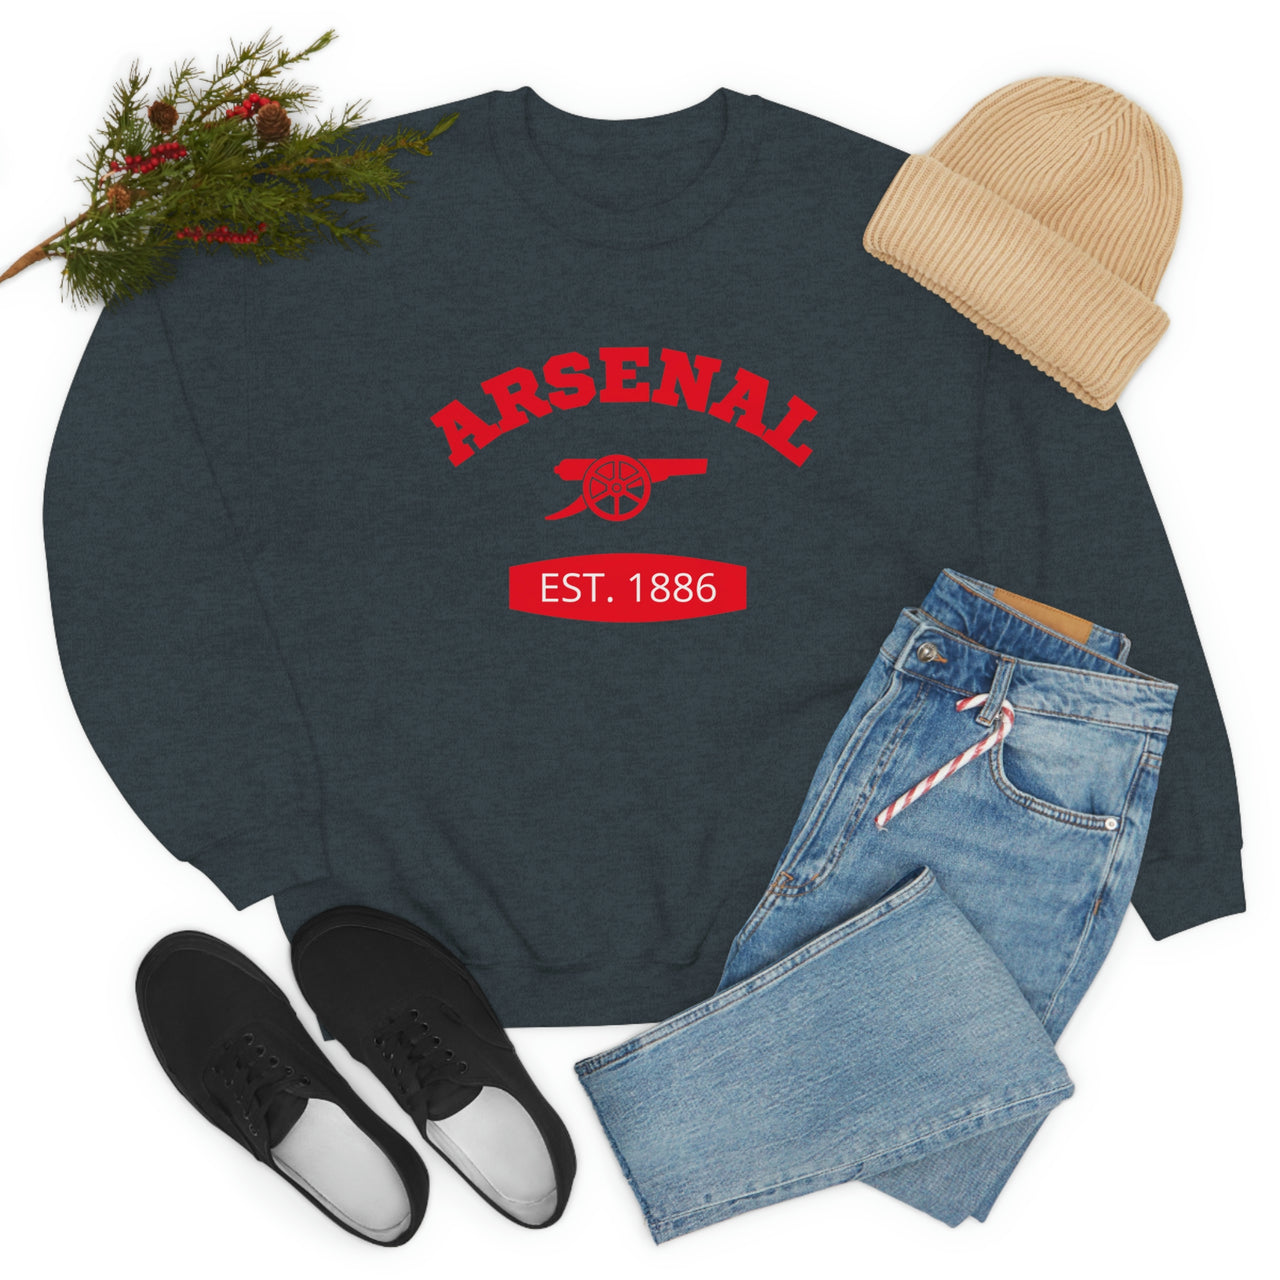 Arsenal Unisex  Crewneck Sweatshirt